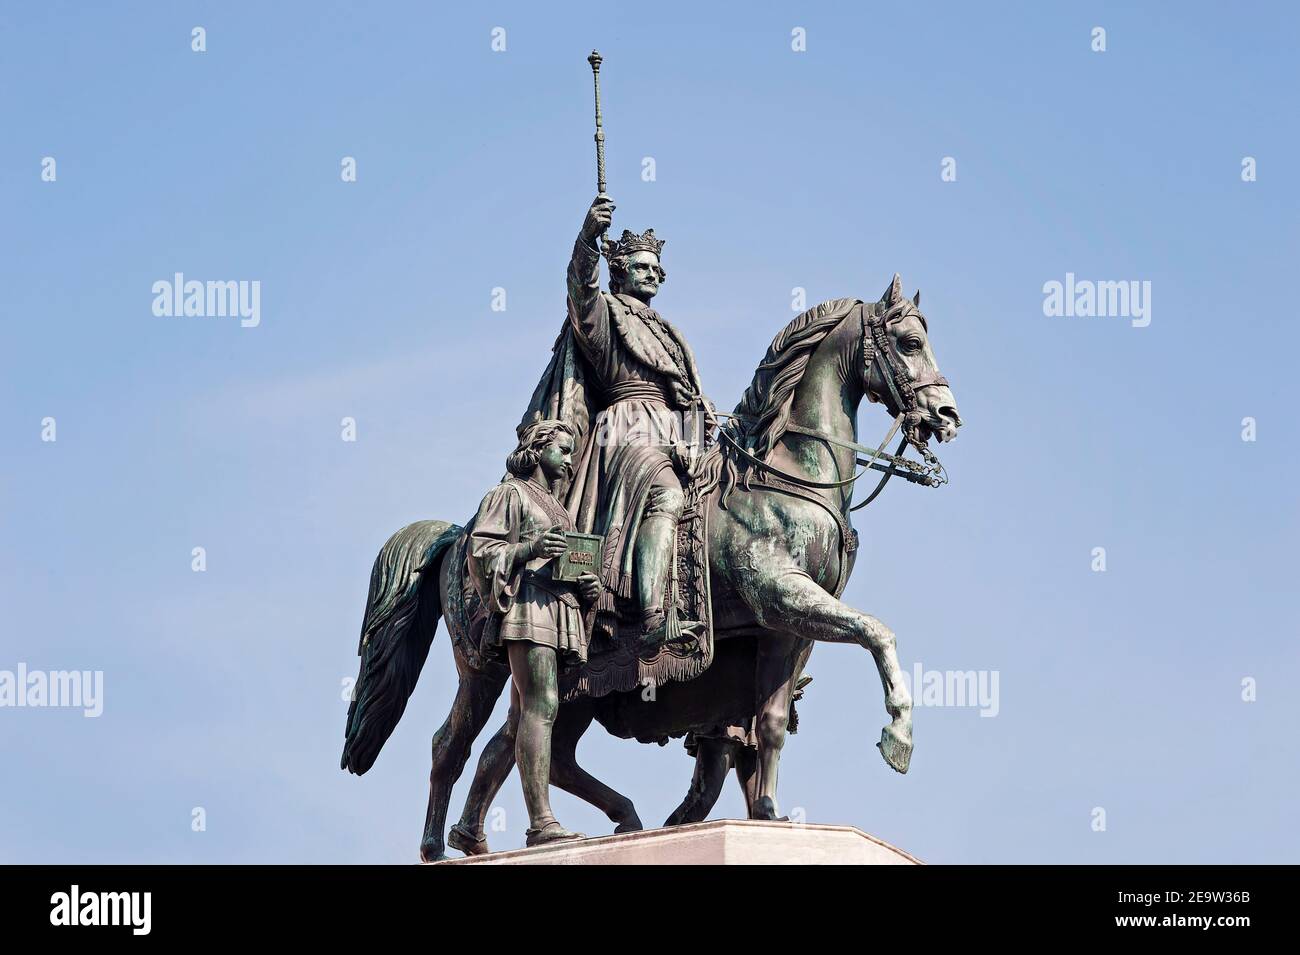 Munich - Germany, April 23, 2019: Statue of Ludwig I, King of Bavaria, Munich Stock Photo